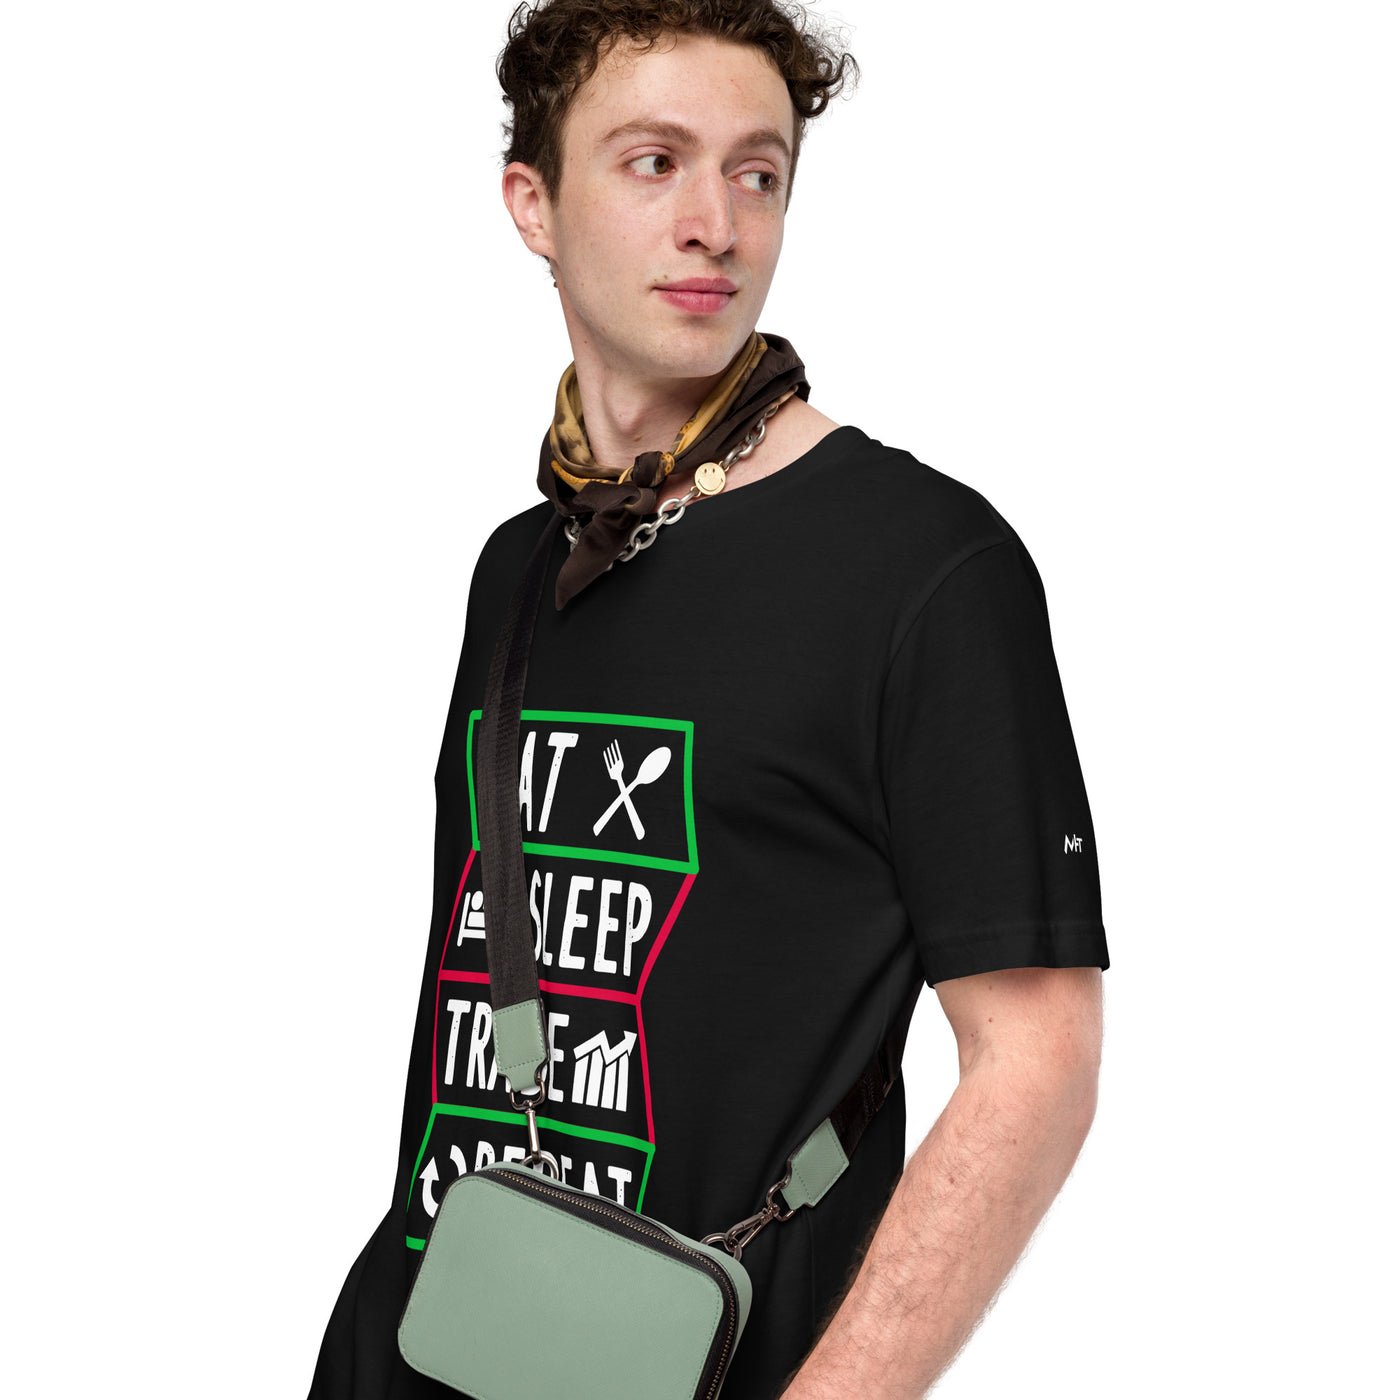 Eat, Sleep, Trade, Repeat - Unisex t-shirt